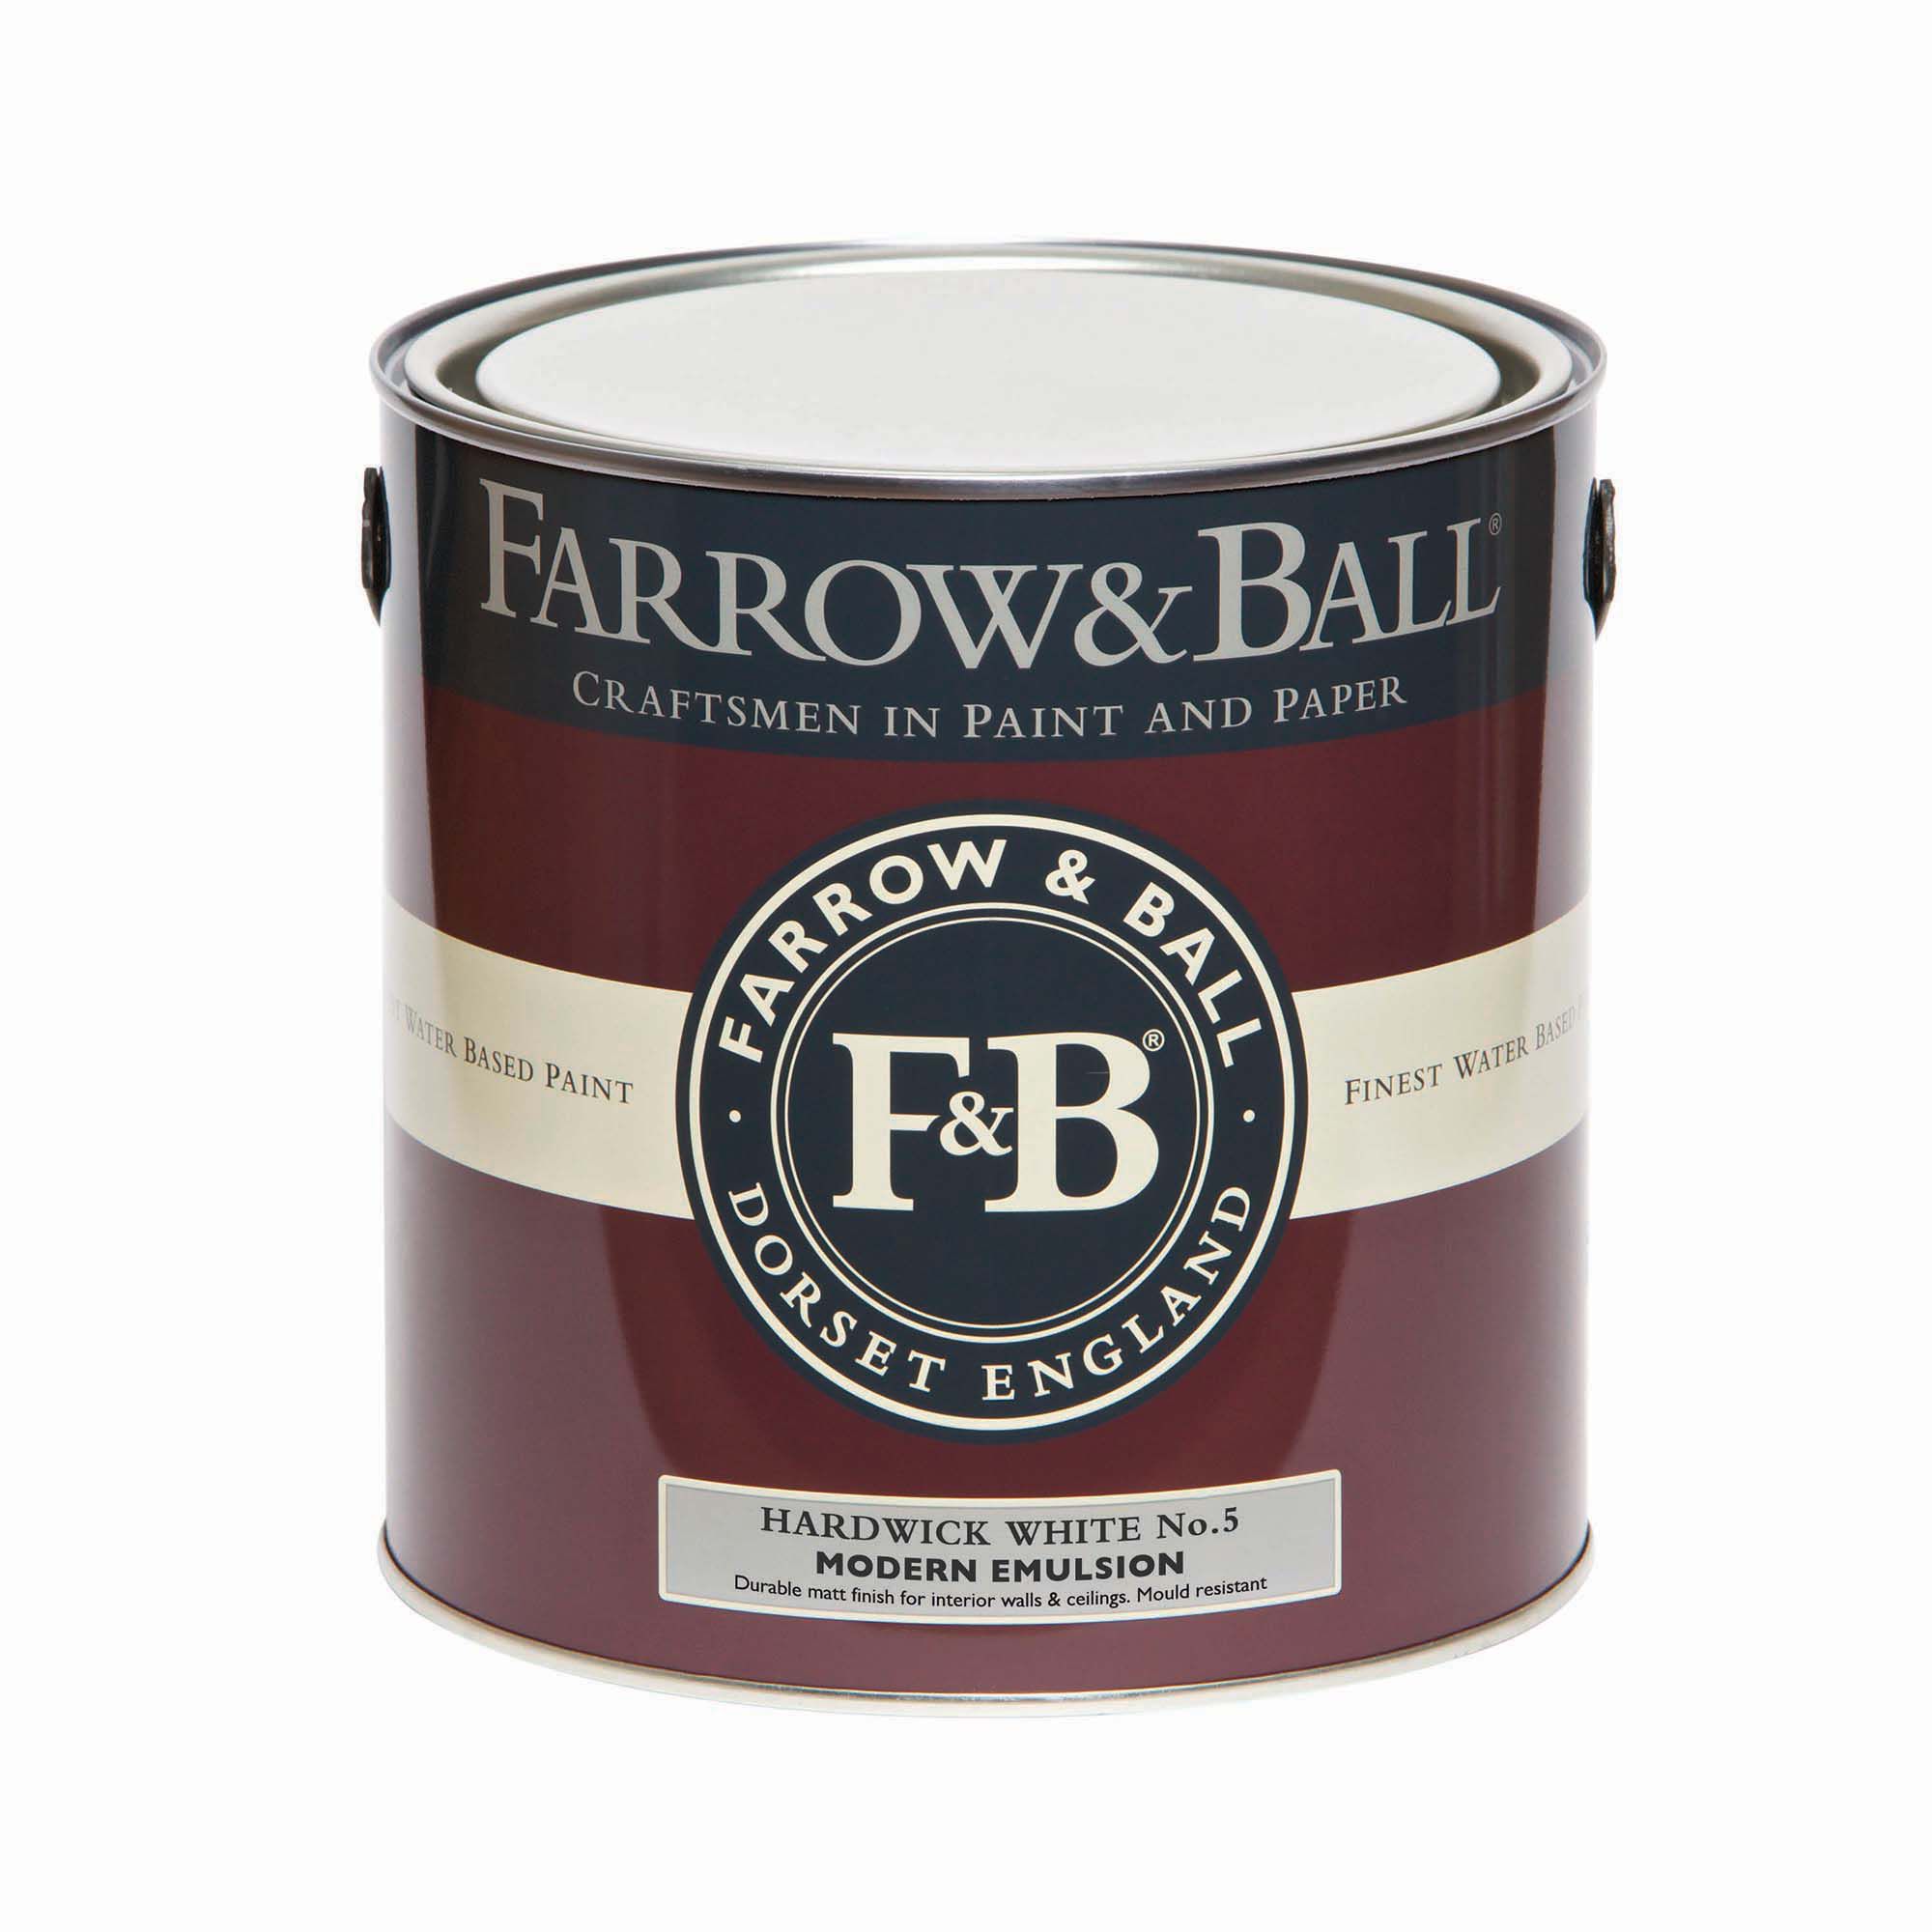 Farrow & Ball Modern Hardwick White No.5 Matt Emulsion paint, 2.5L